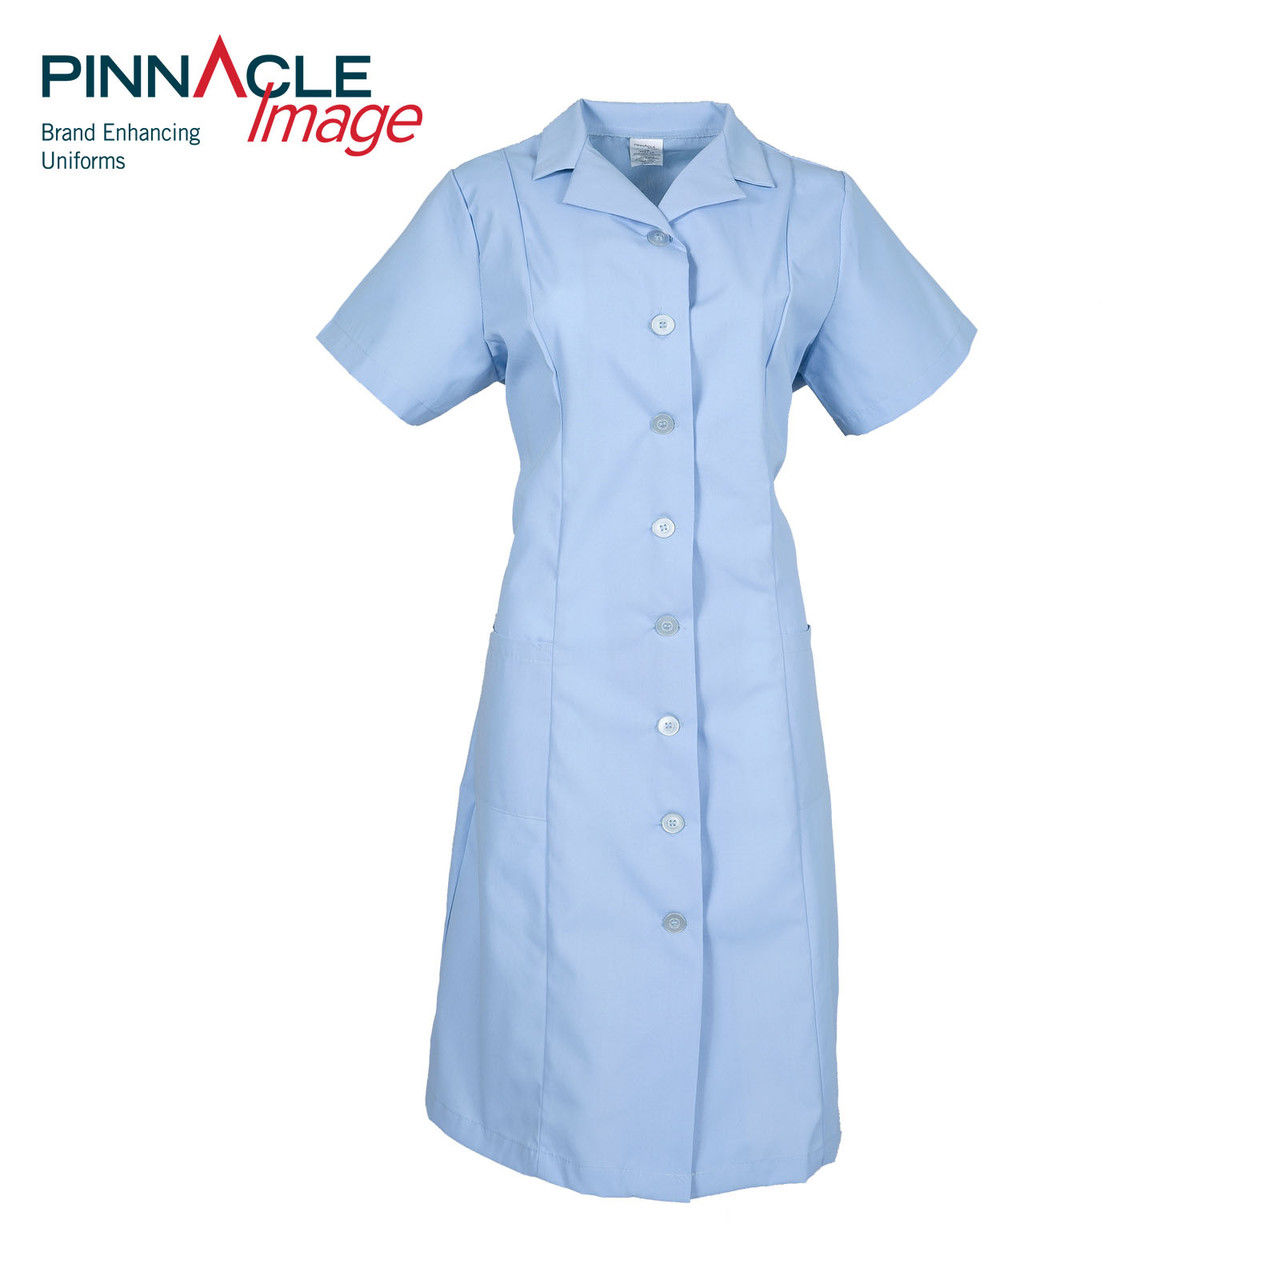 Is the blue uniform dress durable enough for regular wear?